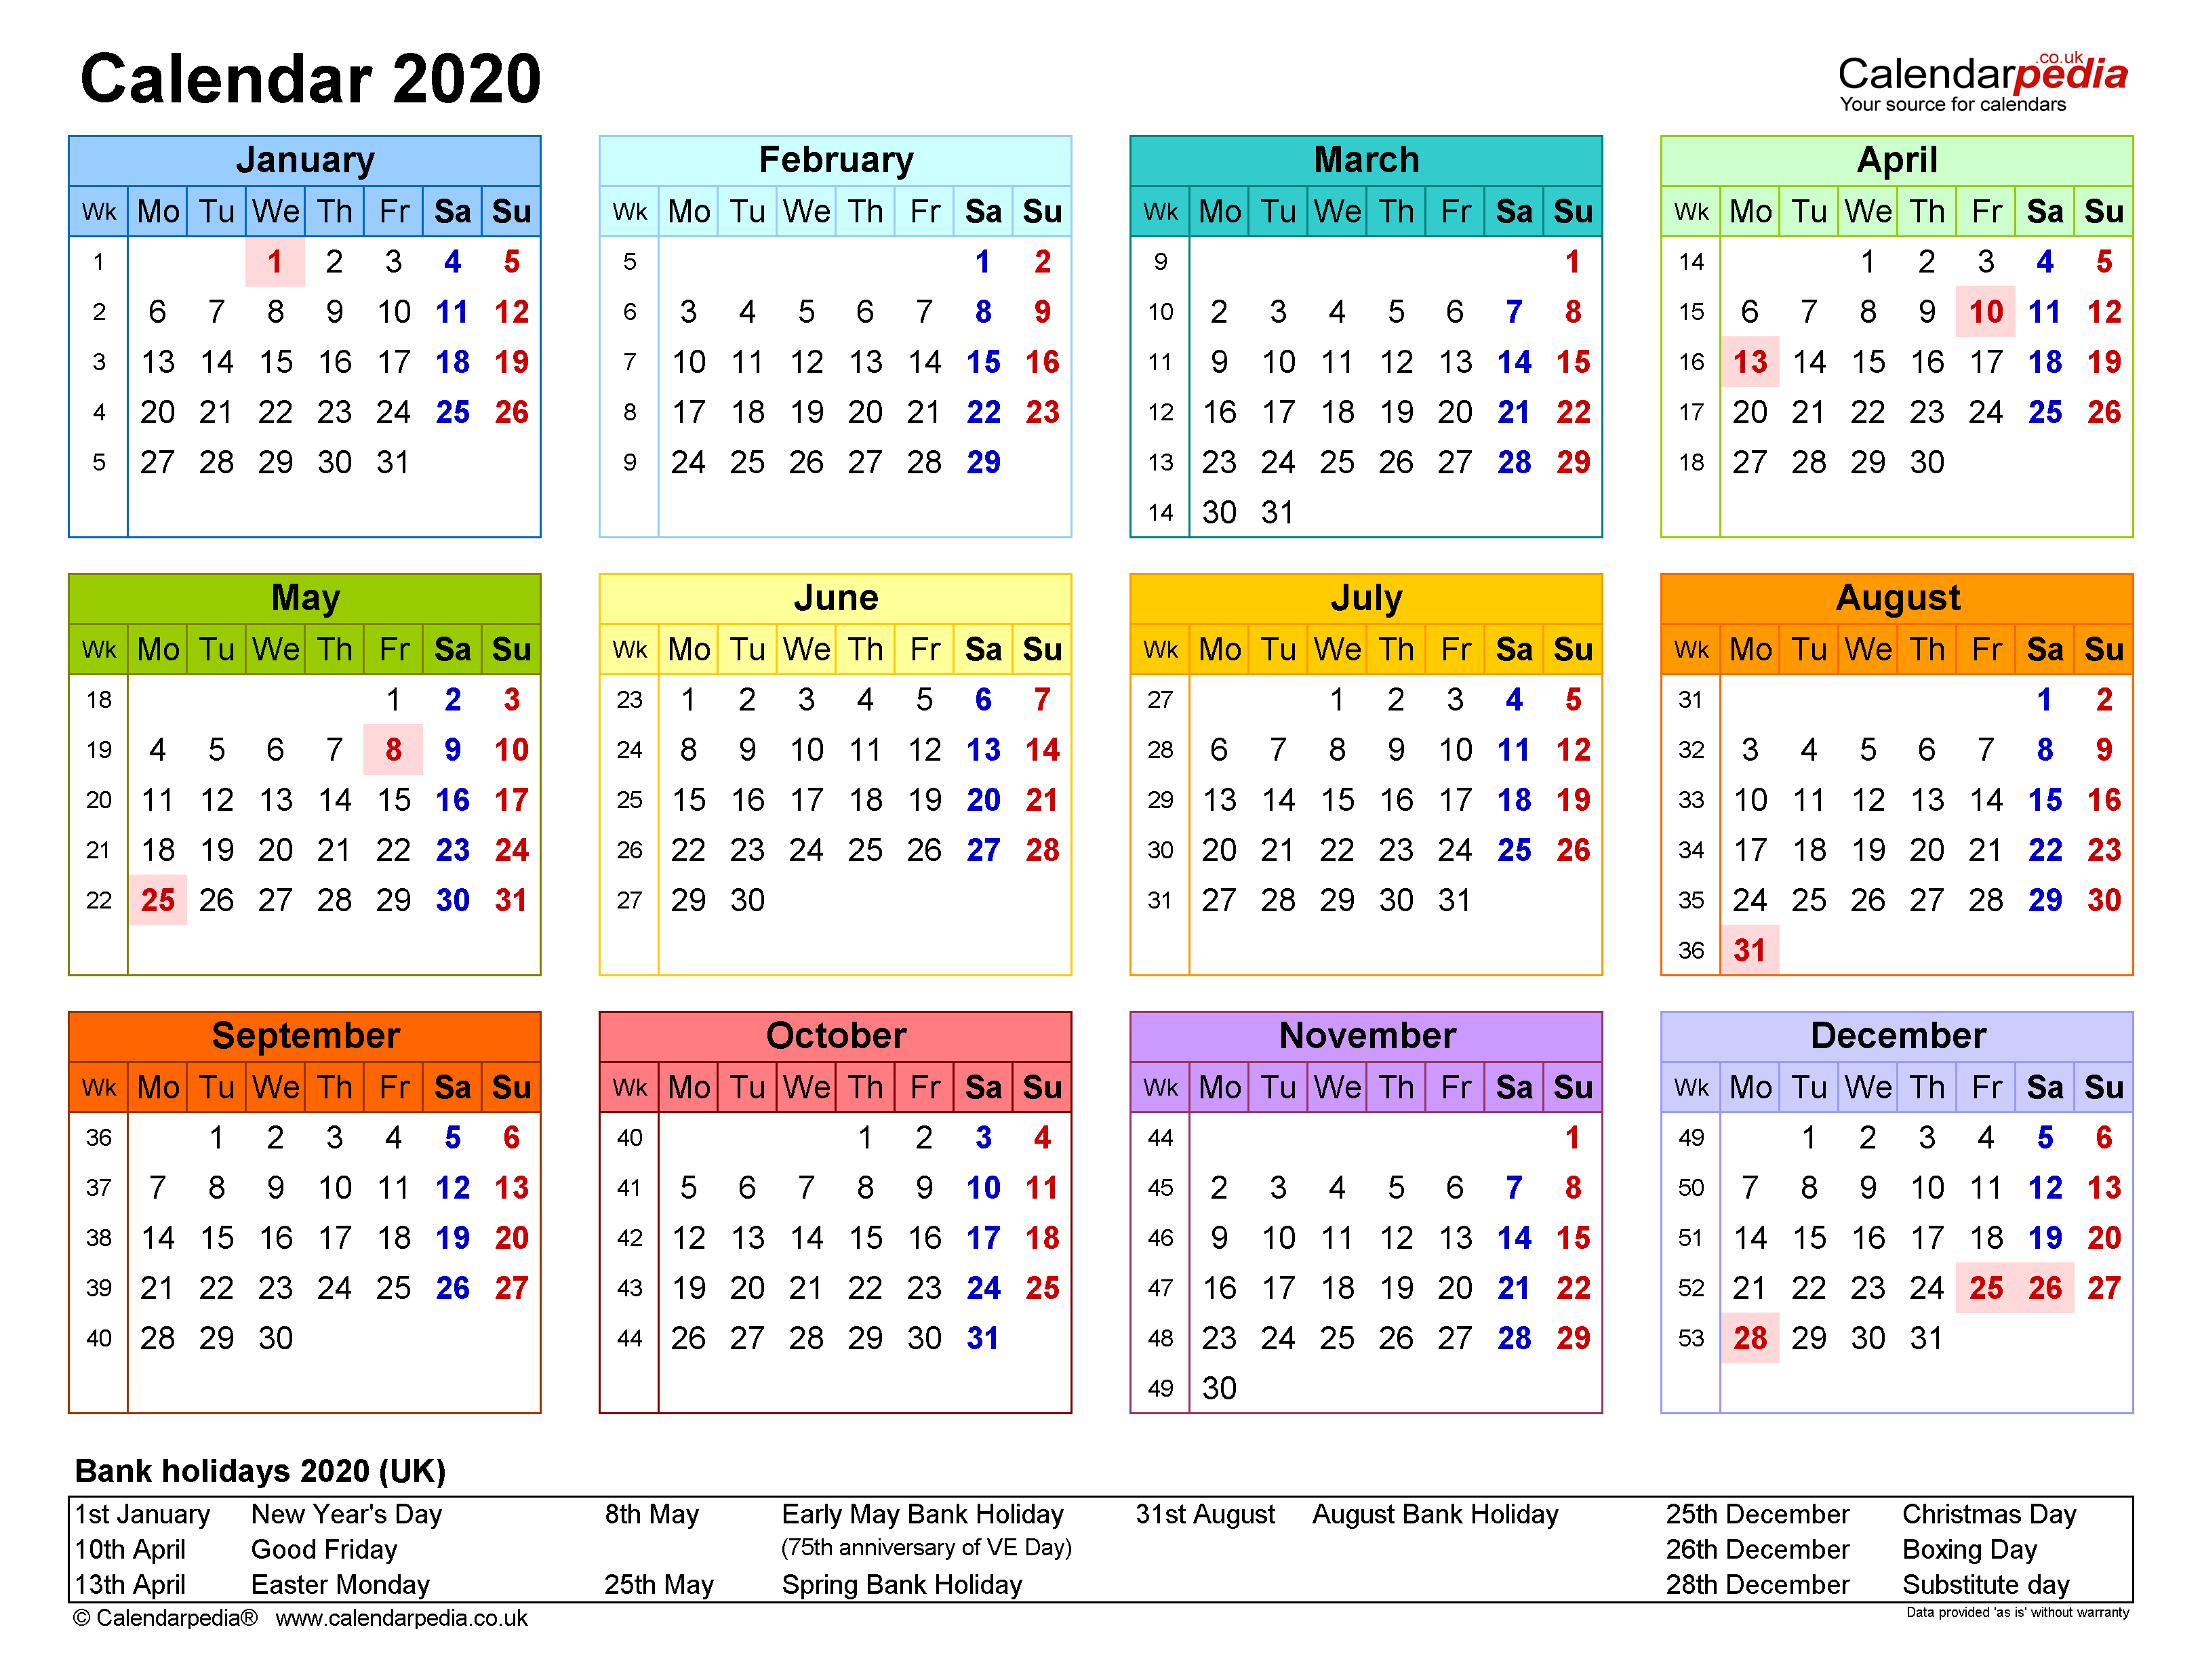 Calendar 2020 (UK) - free printable PDF templates